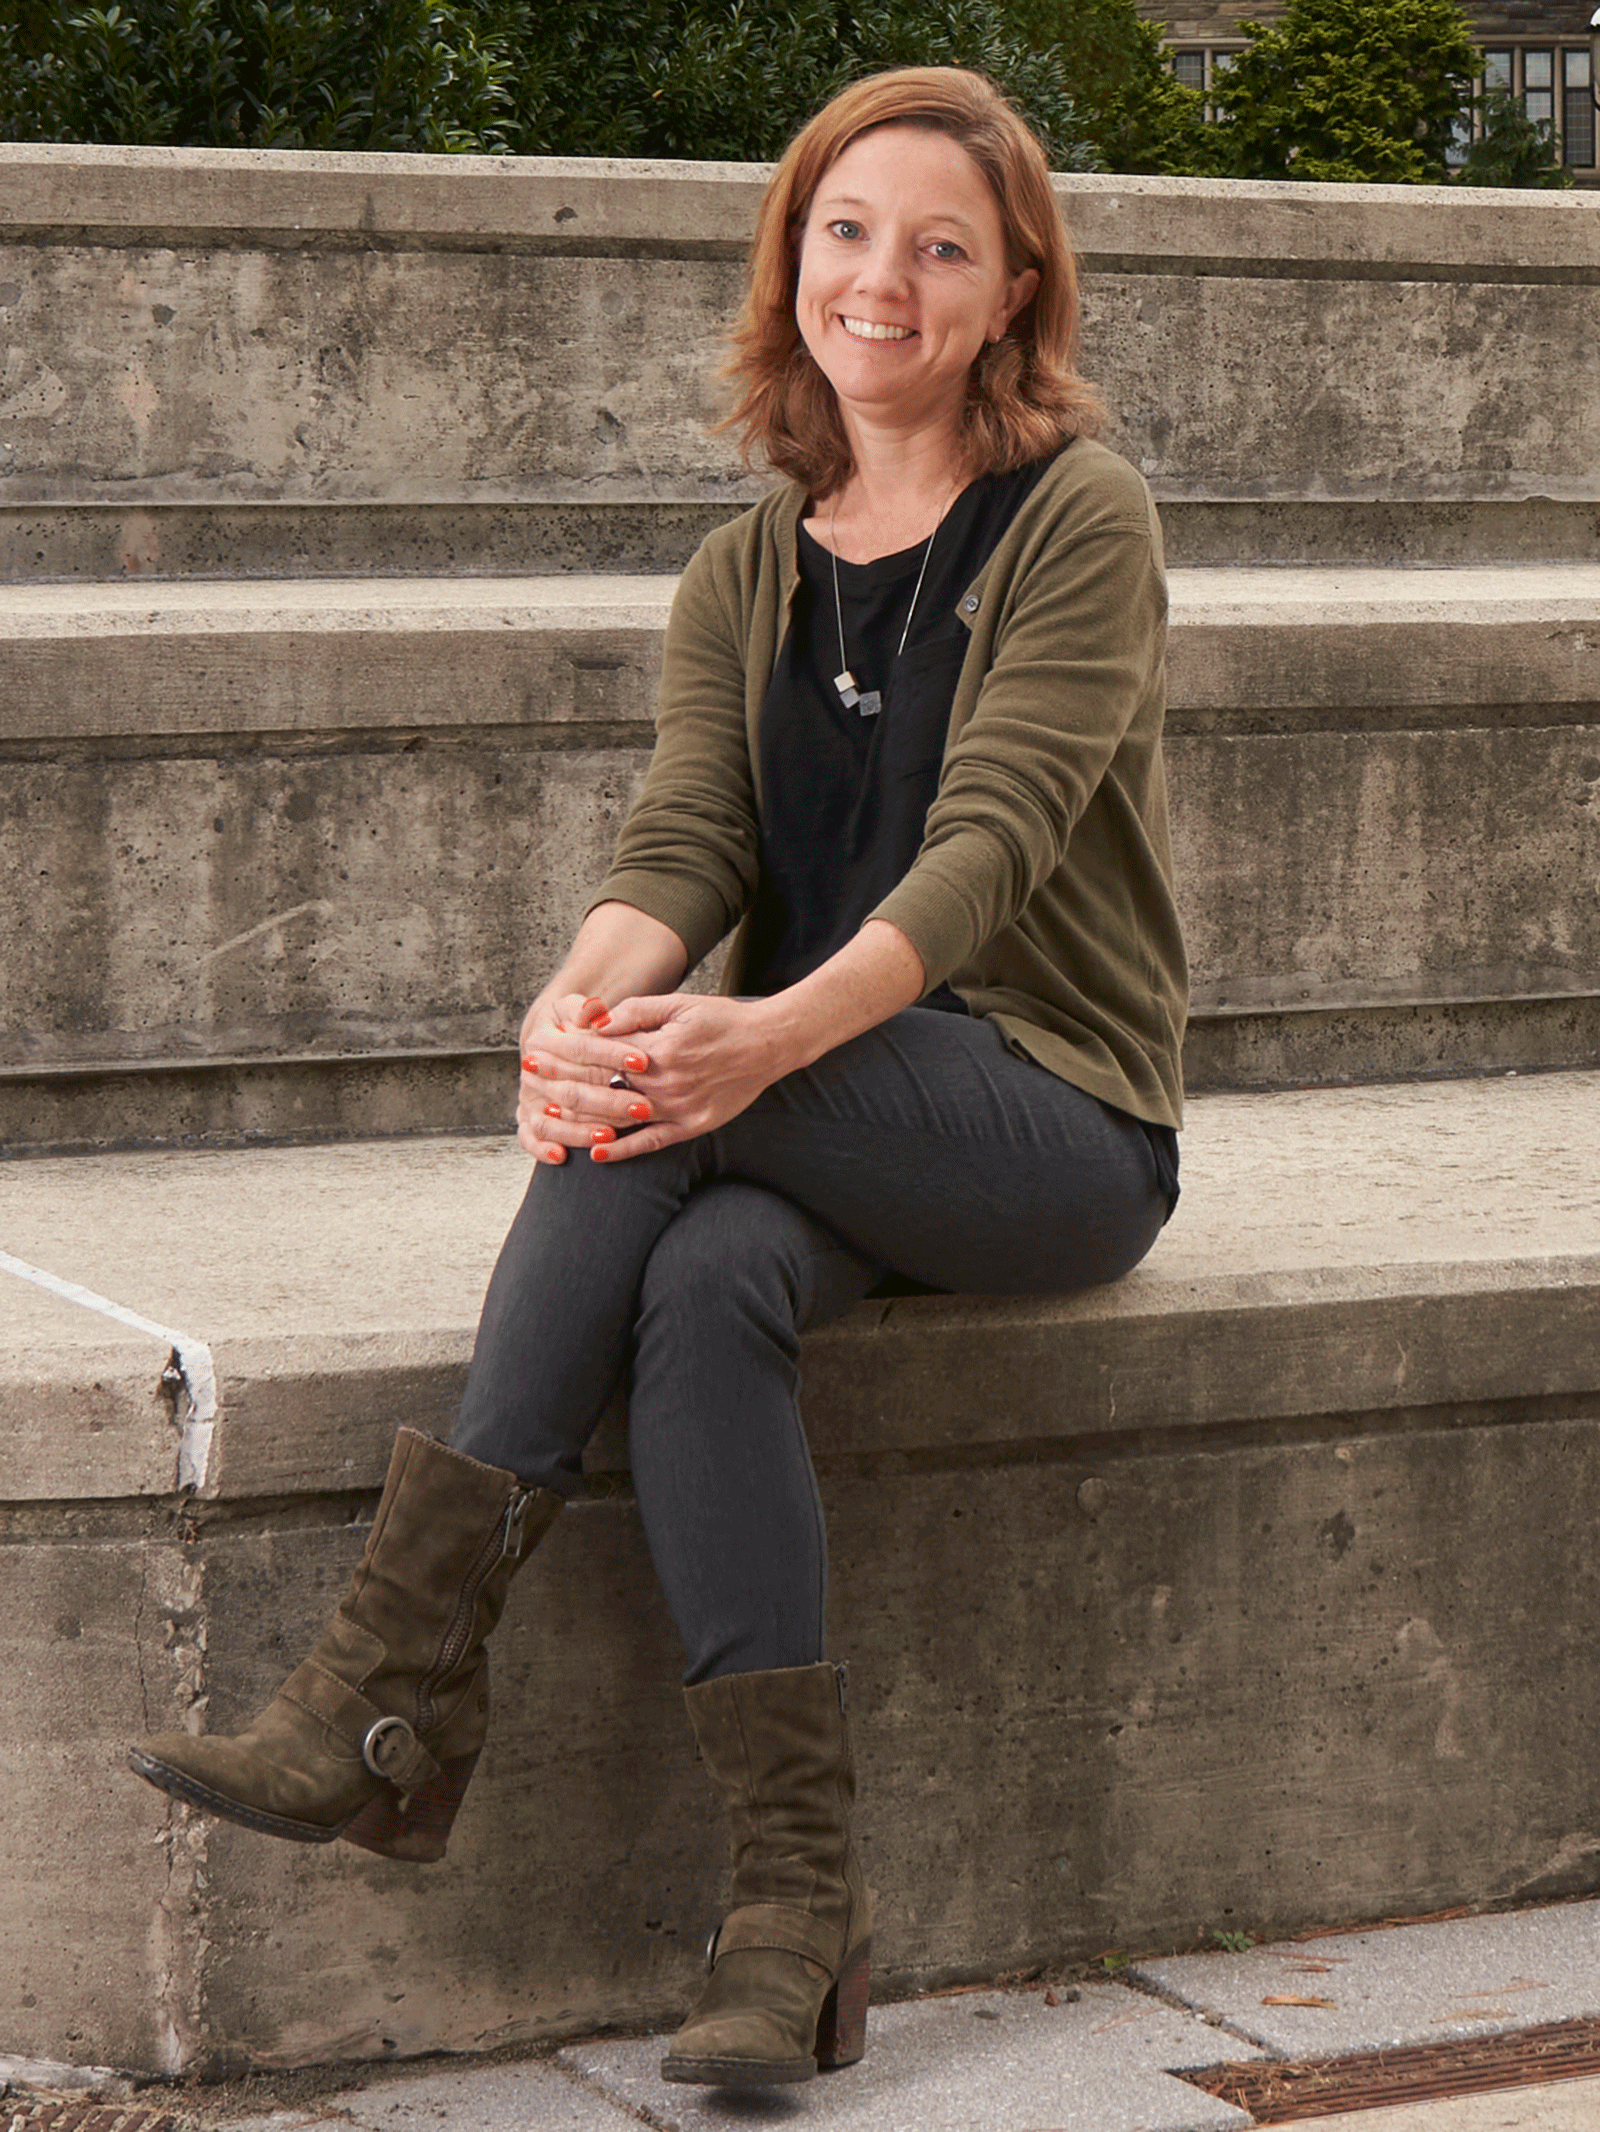 Emily Hage, art professor at Saint Joseph's University